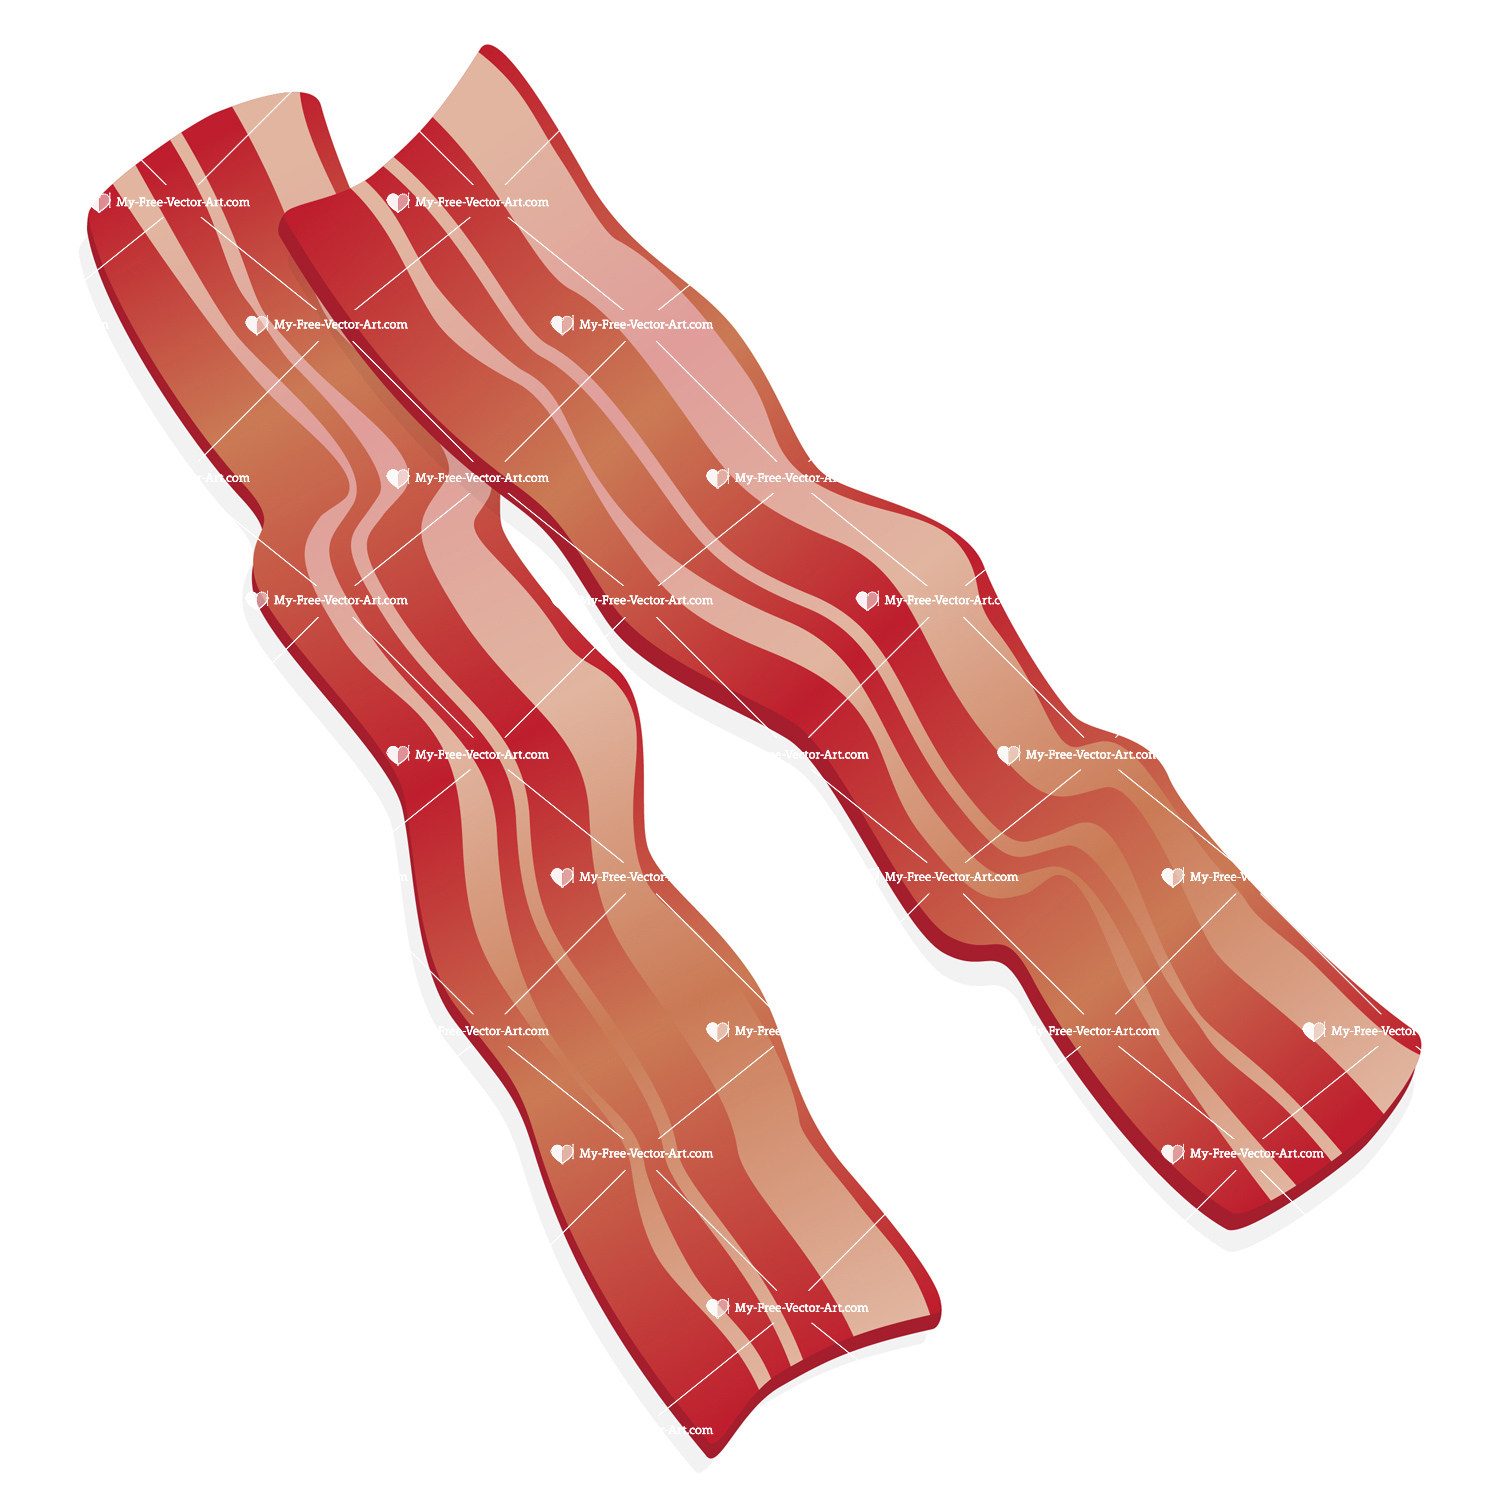 Bacon Clipart Toggle Navigation